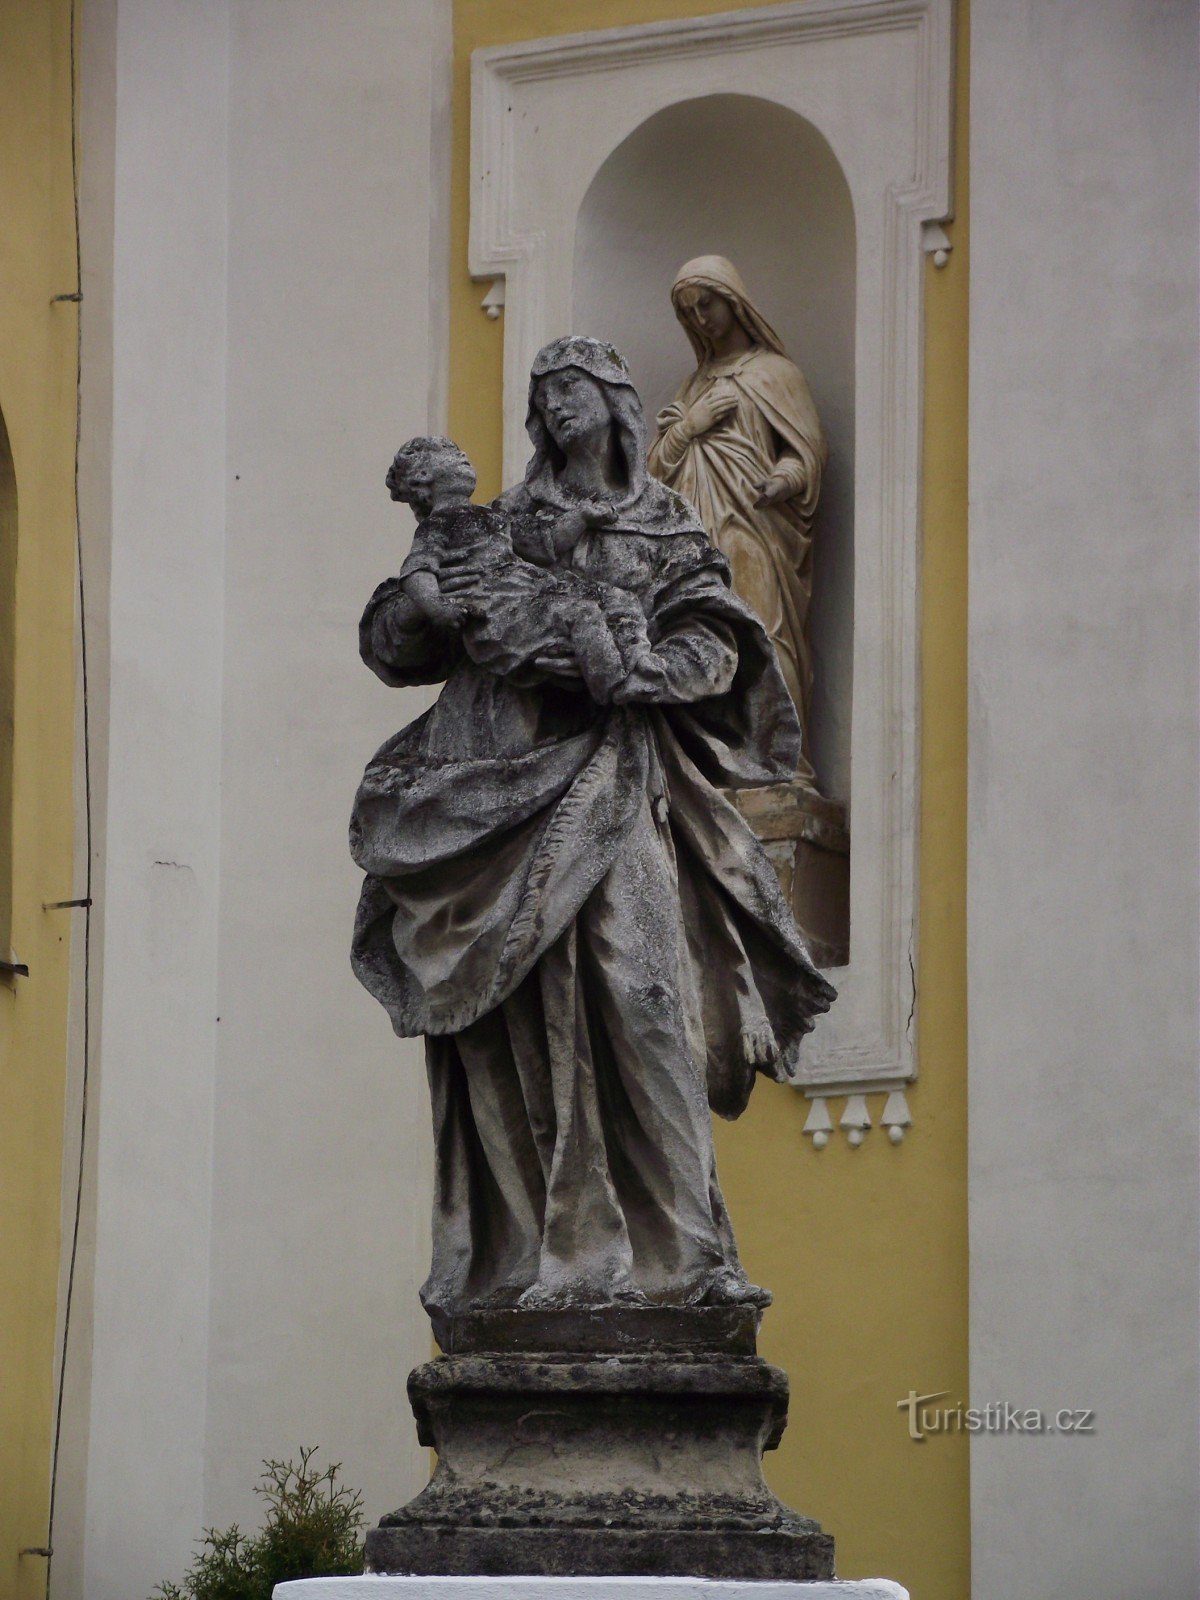 Мілотіце - церква Всіх Святих і скульптурна галерея на стіні